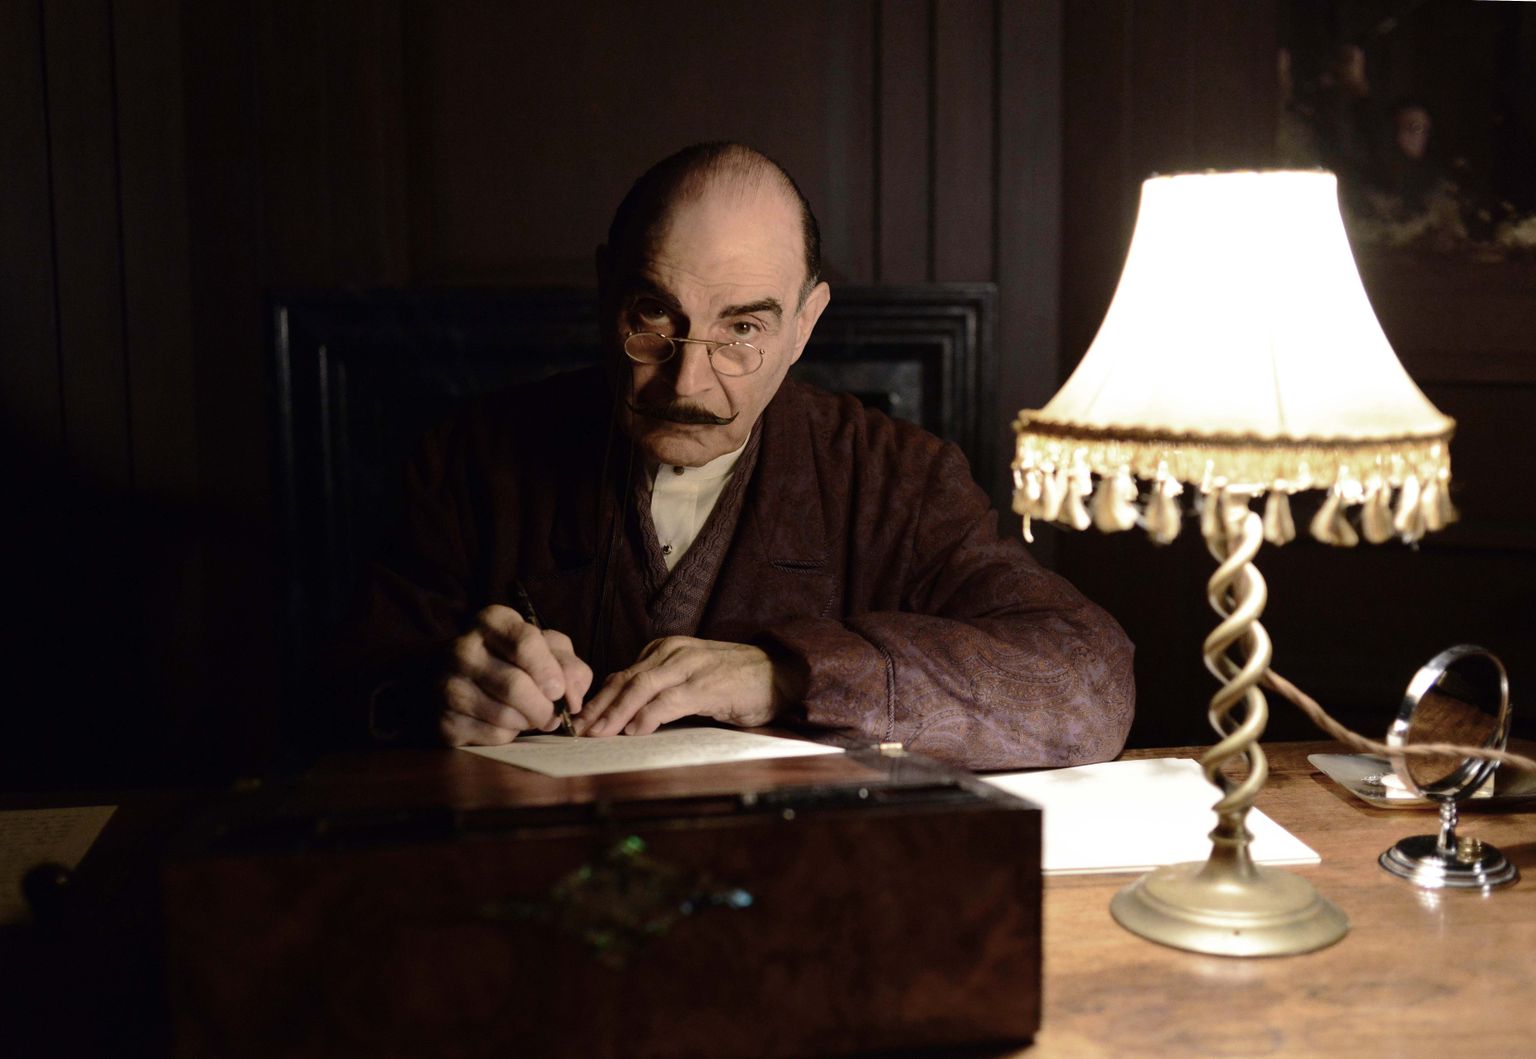 Näitleja David Suchet kehastamas Agatha Christie tegelaskuju Hercule Poirot.